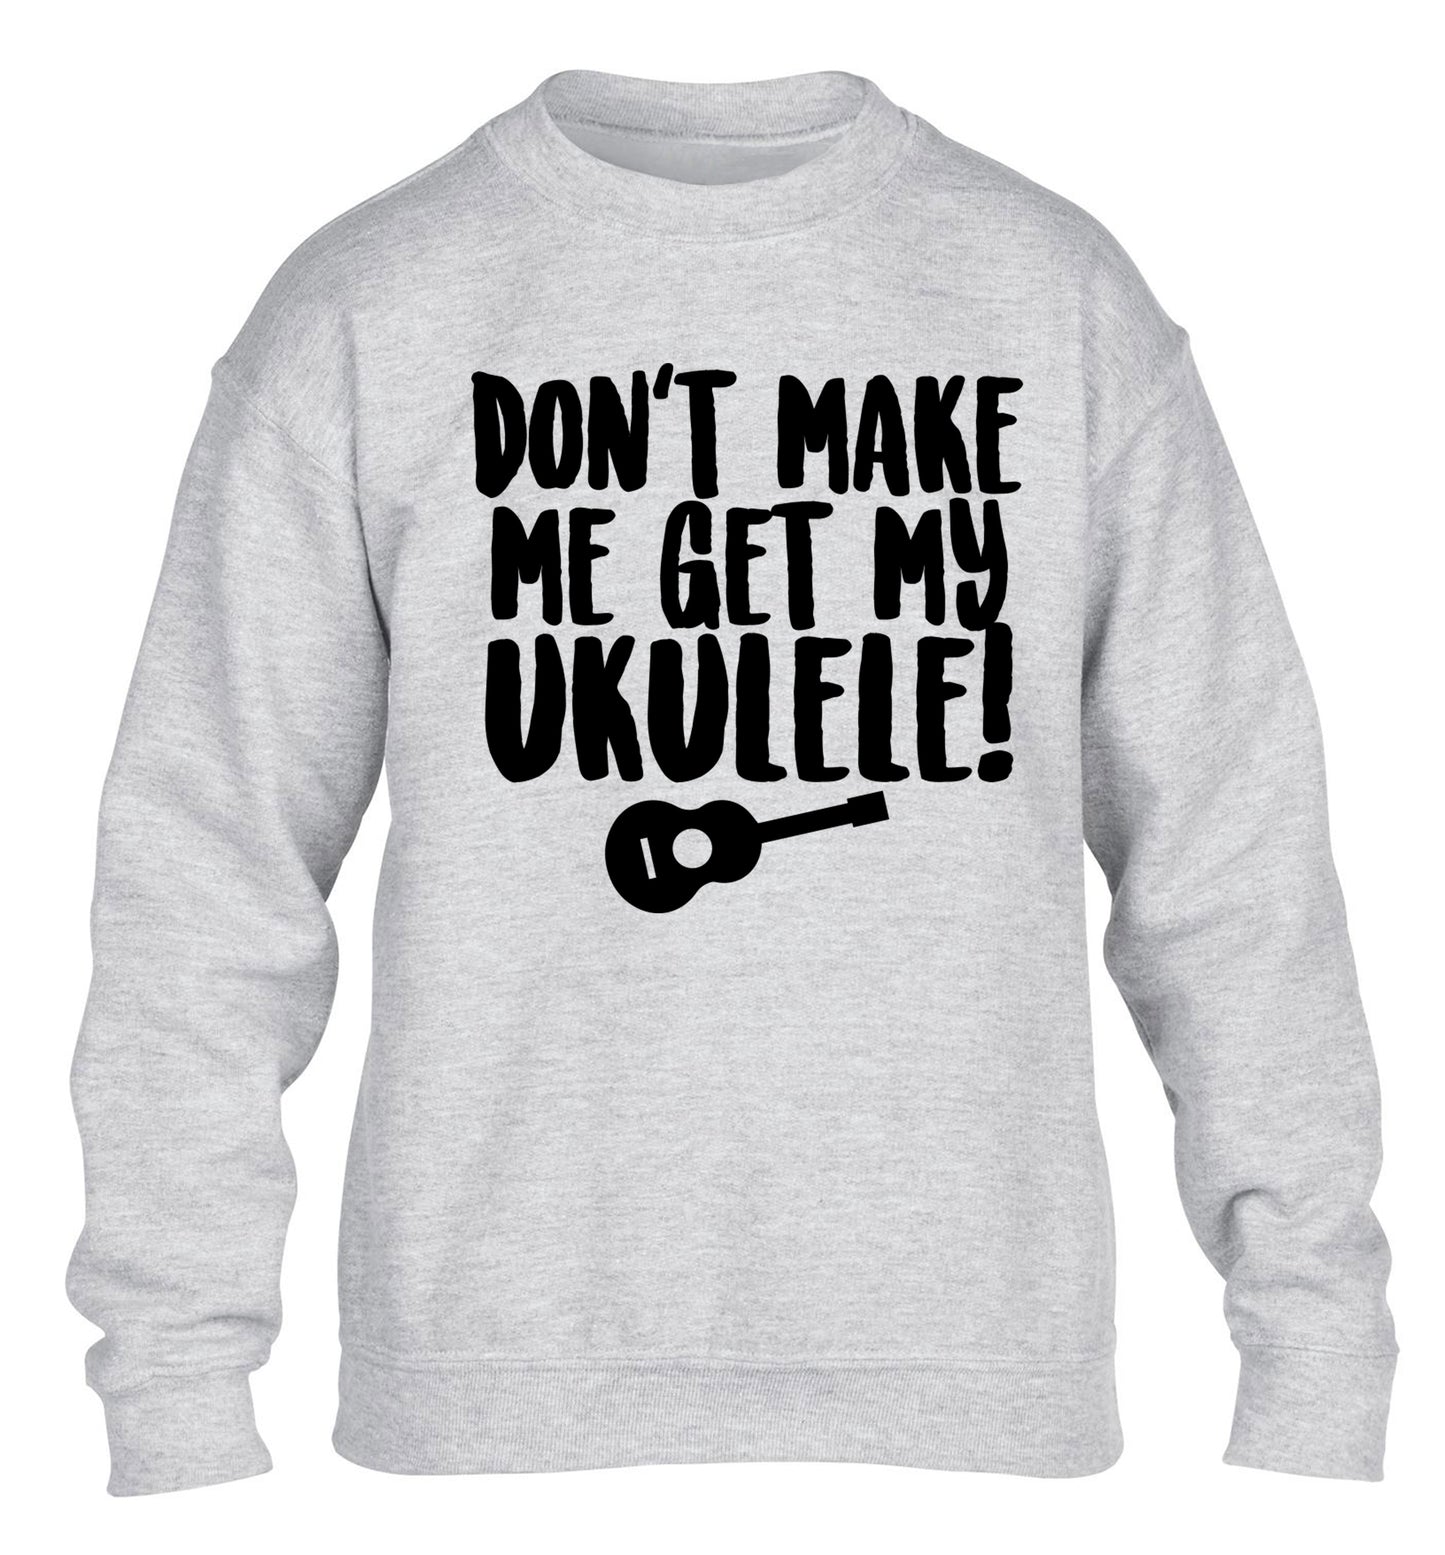 Don't make me get my ukulele children's grey sweater 12-14 Years